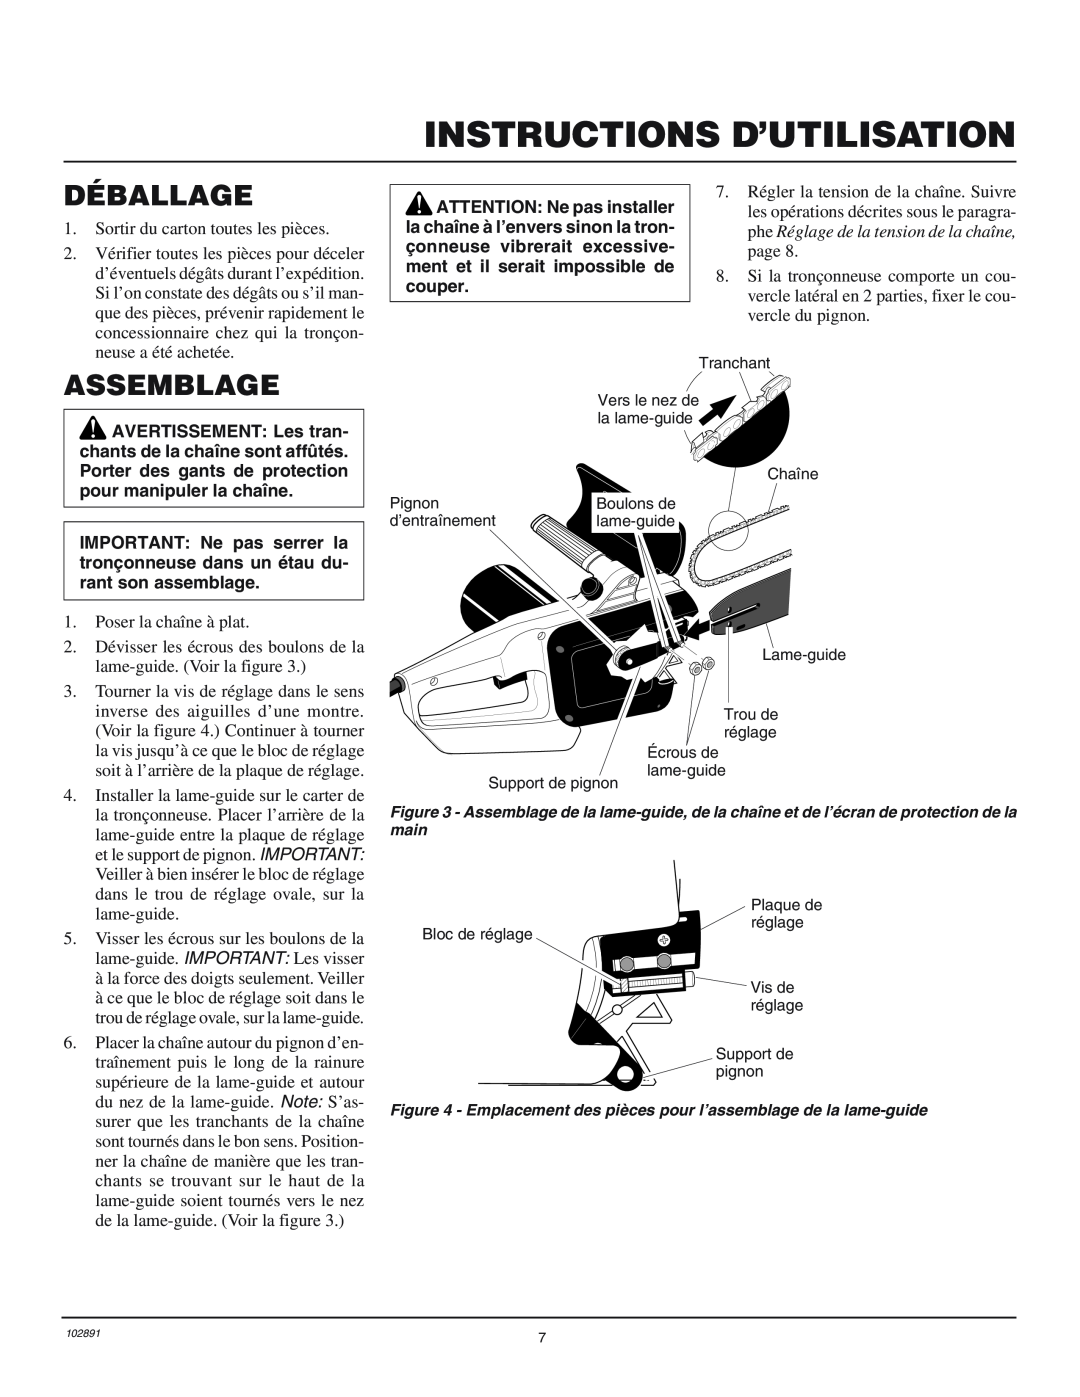 Desa 100271-01 owner manual Déballage, Assemblage, Instructions D’Utilisation 